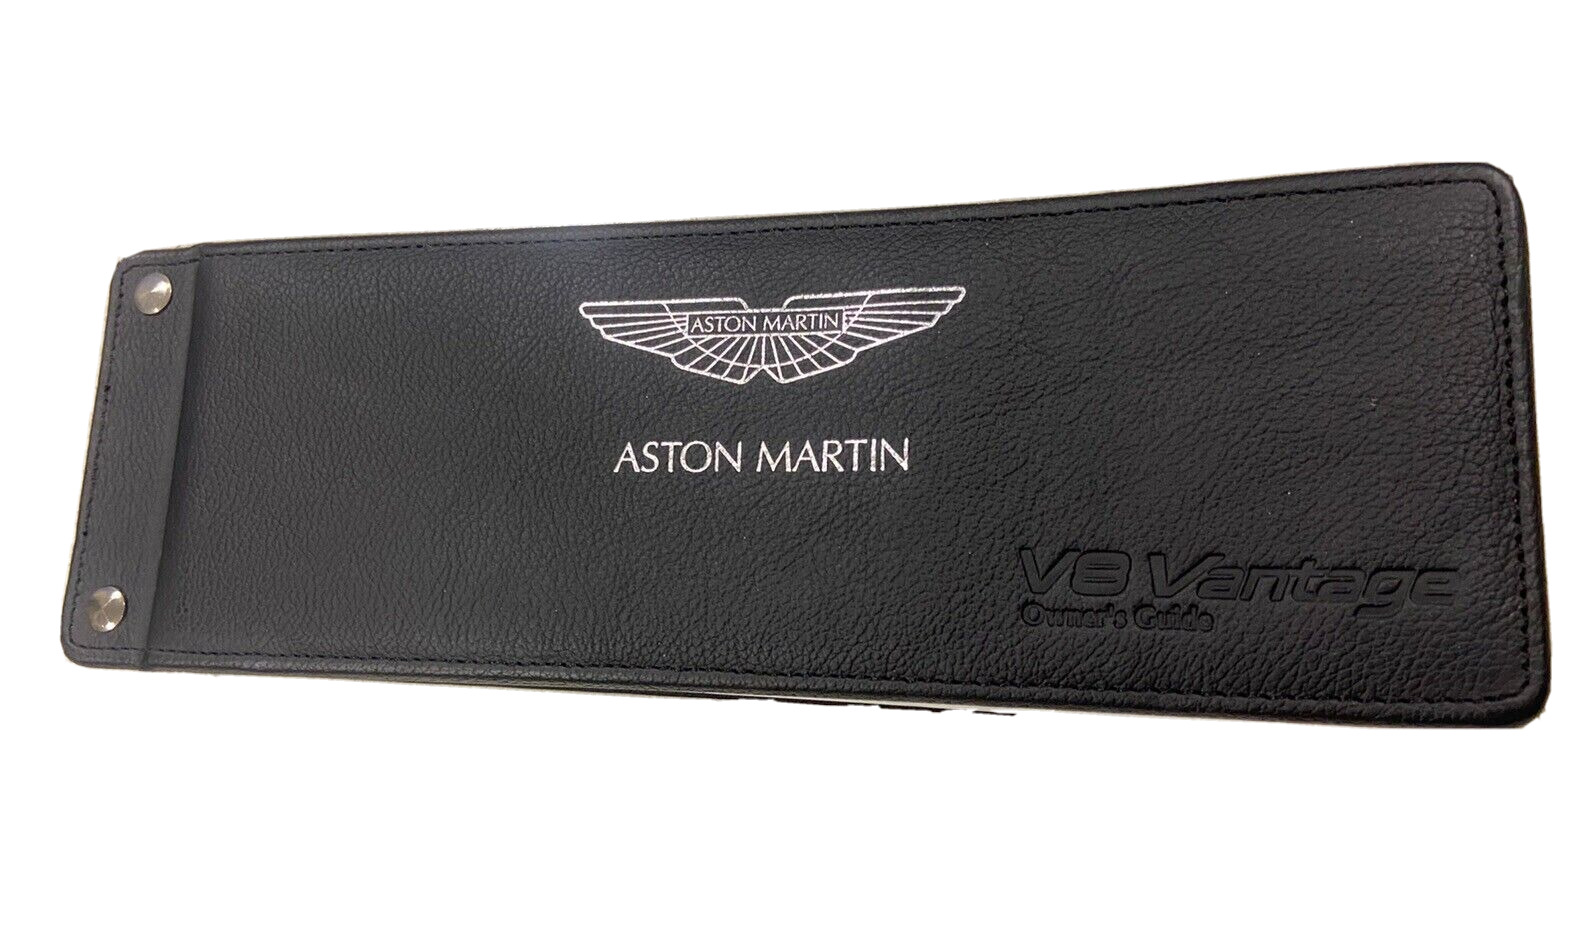 2013 ASTON MARTIN VANTAGE V8 OWNER'S Guide MANUAL HANDBOOK USED OEM